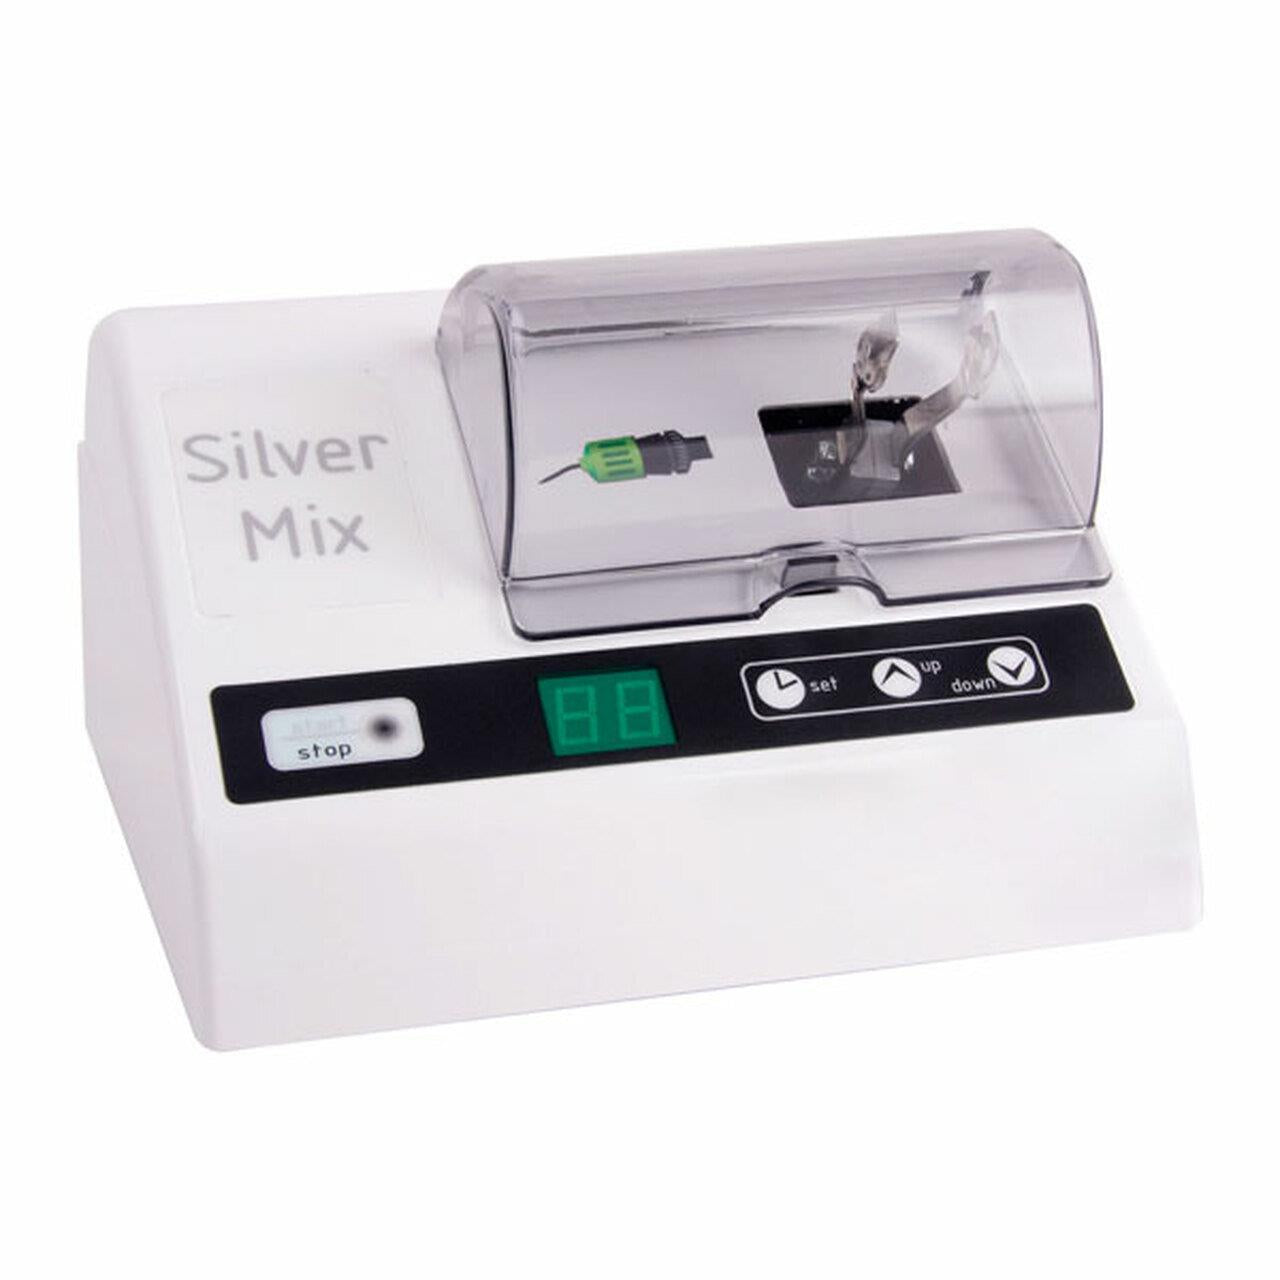 DentrealStore - Gc Dental Silver Mix Digitally Controlled, High Speed Triturator - Amalgamator - Capsule Mixer